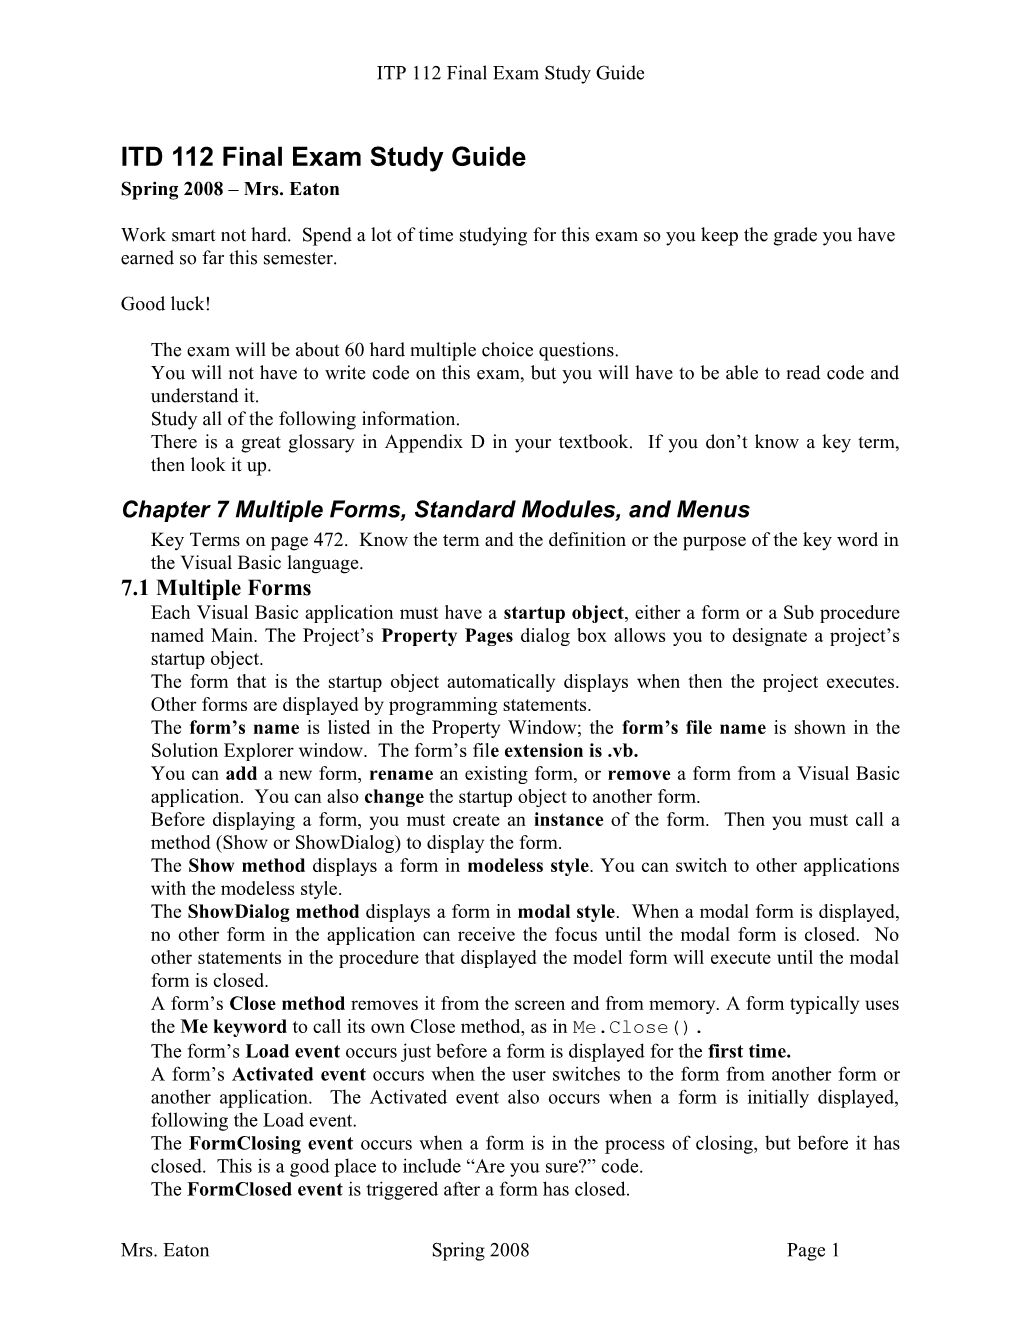 ITD 112 Exam 1 Study Guide